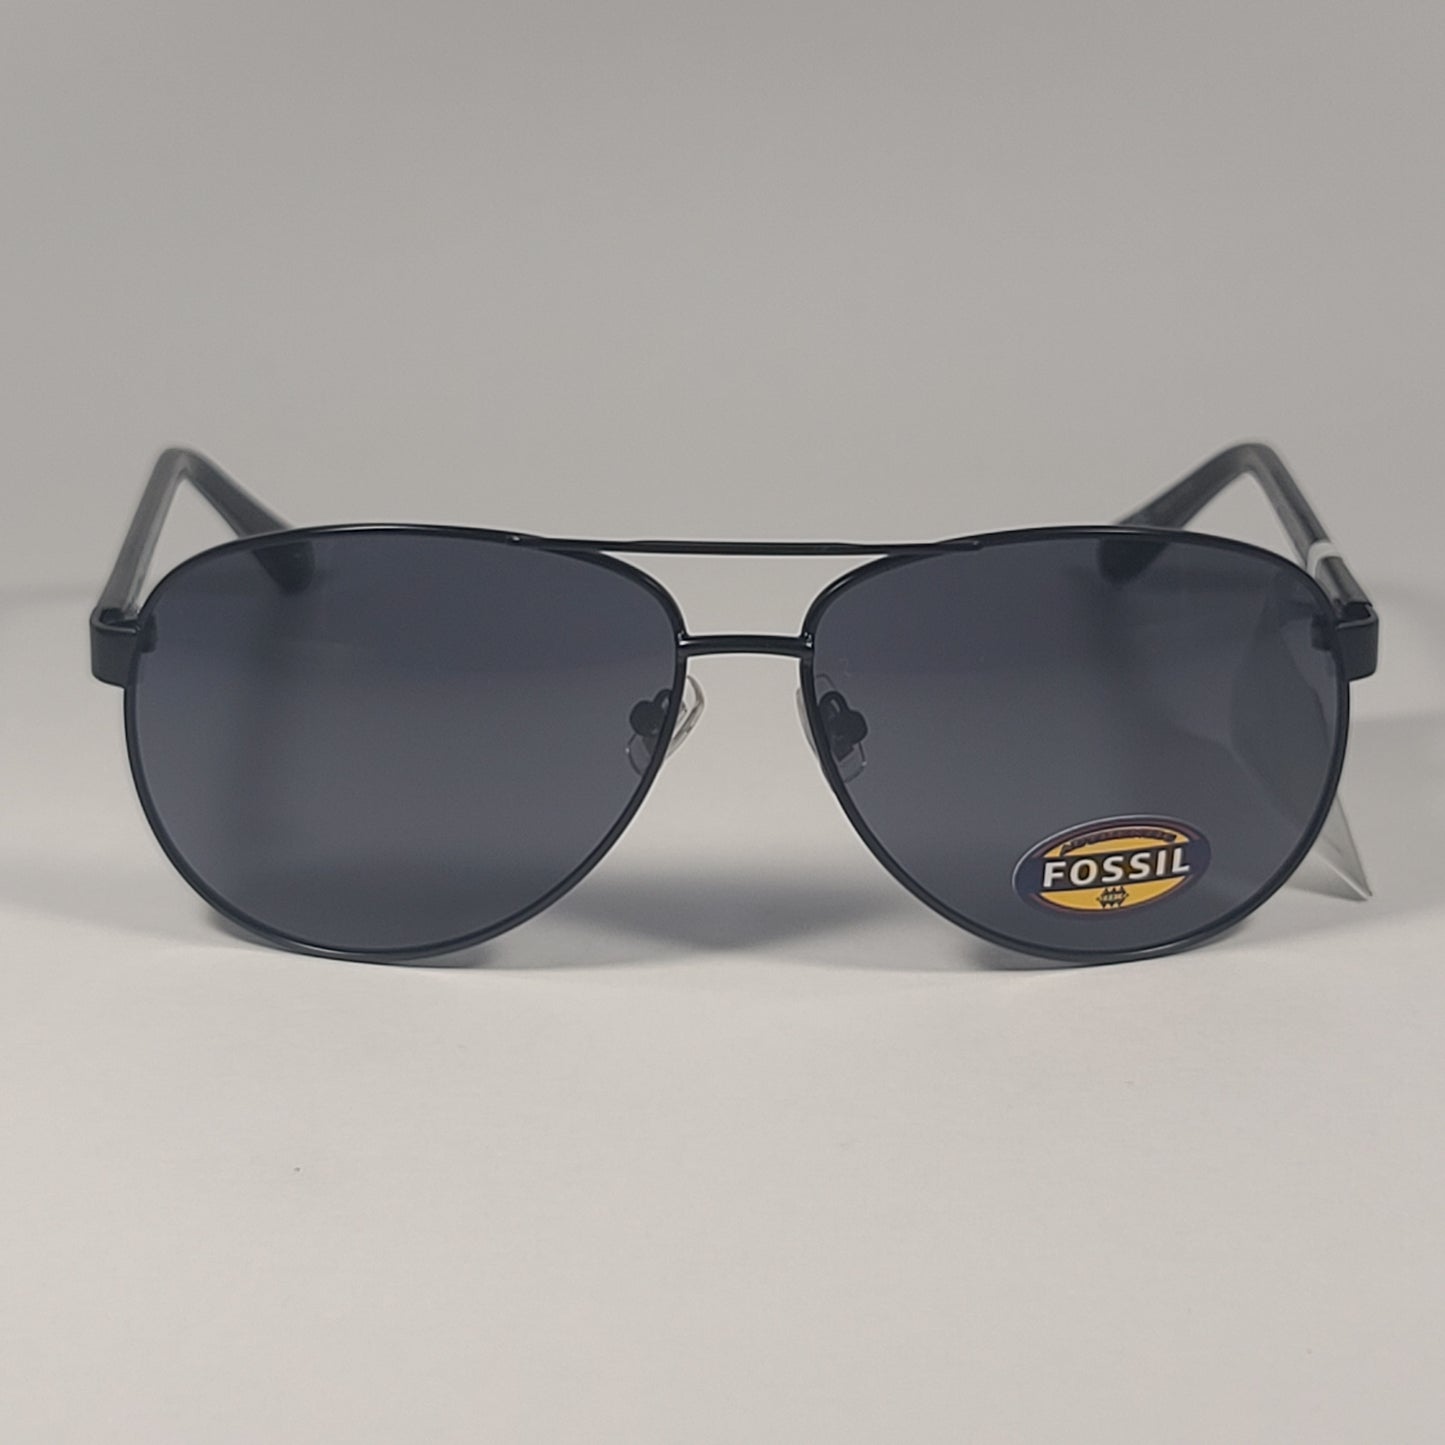 Fossil FM117 Aviator Pilot Style Sunglasses Shiny Black Frame Gray Tinted Lens - Sunglasses